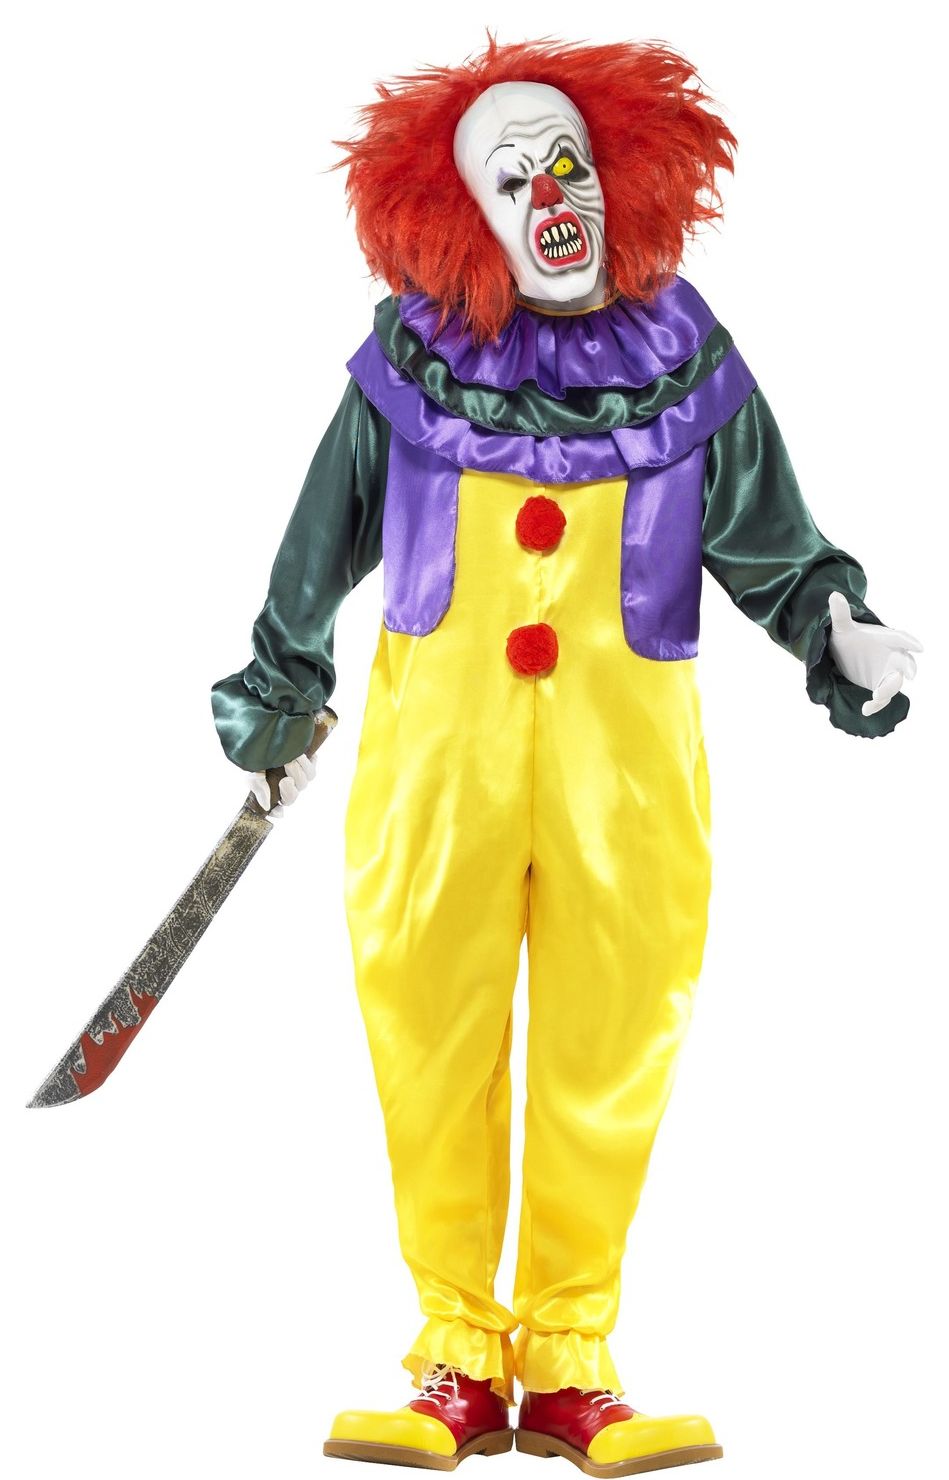 Killer clown pak